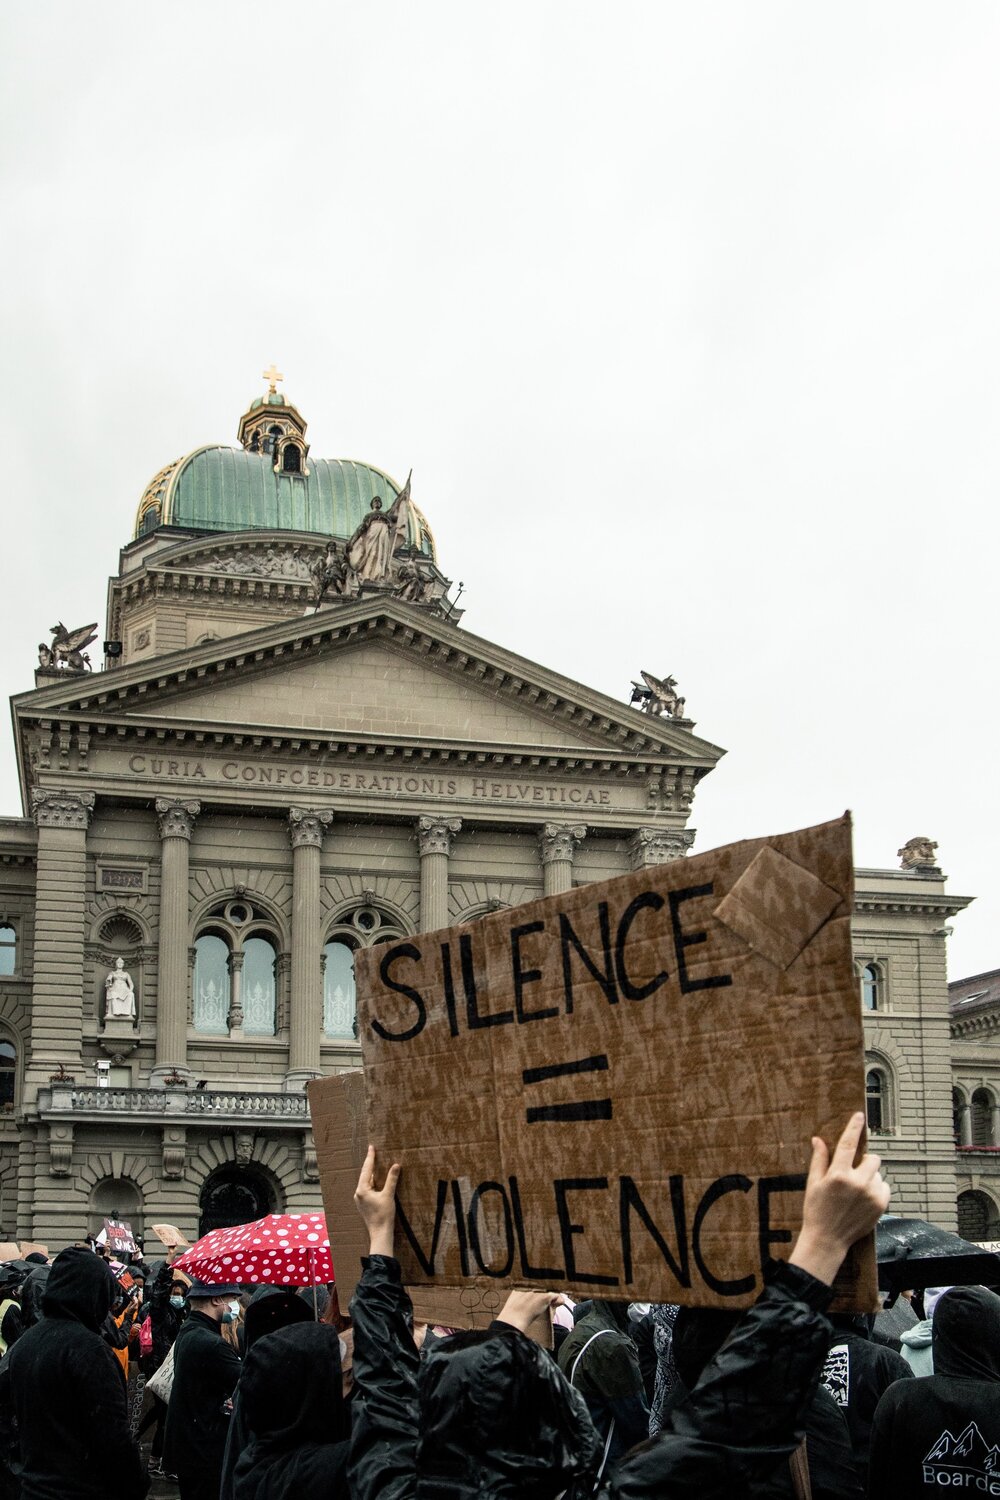 BLM silence egal violence image.jpg